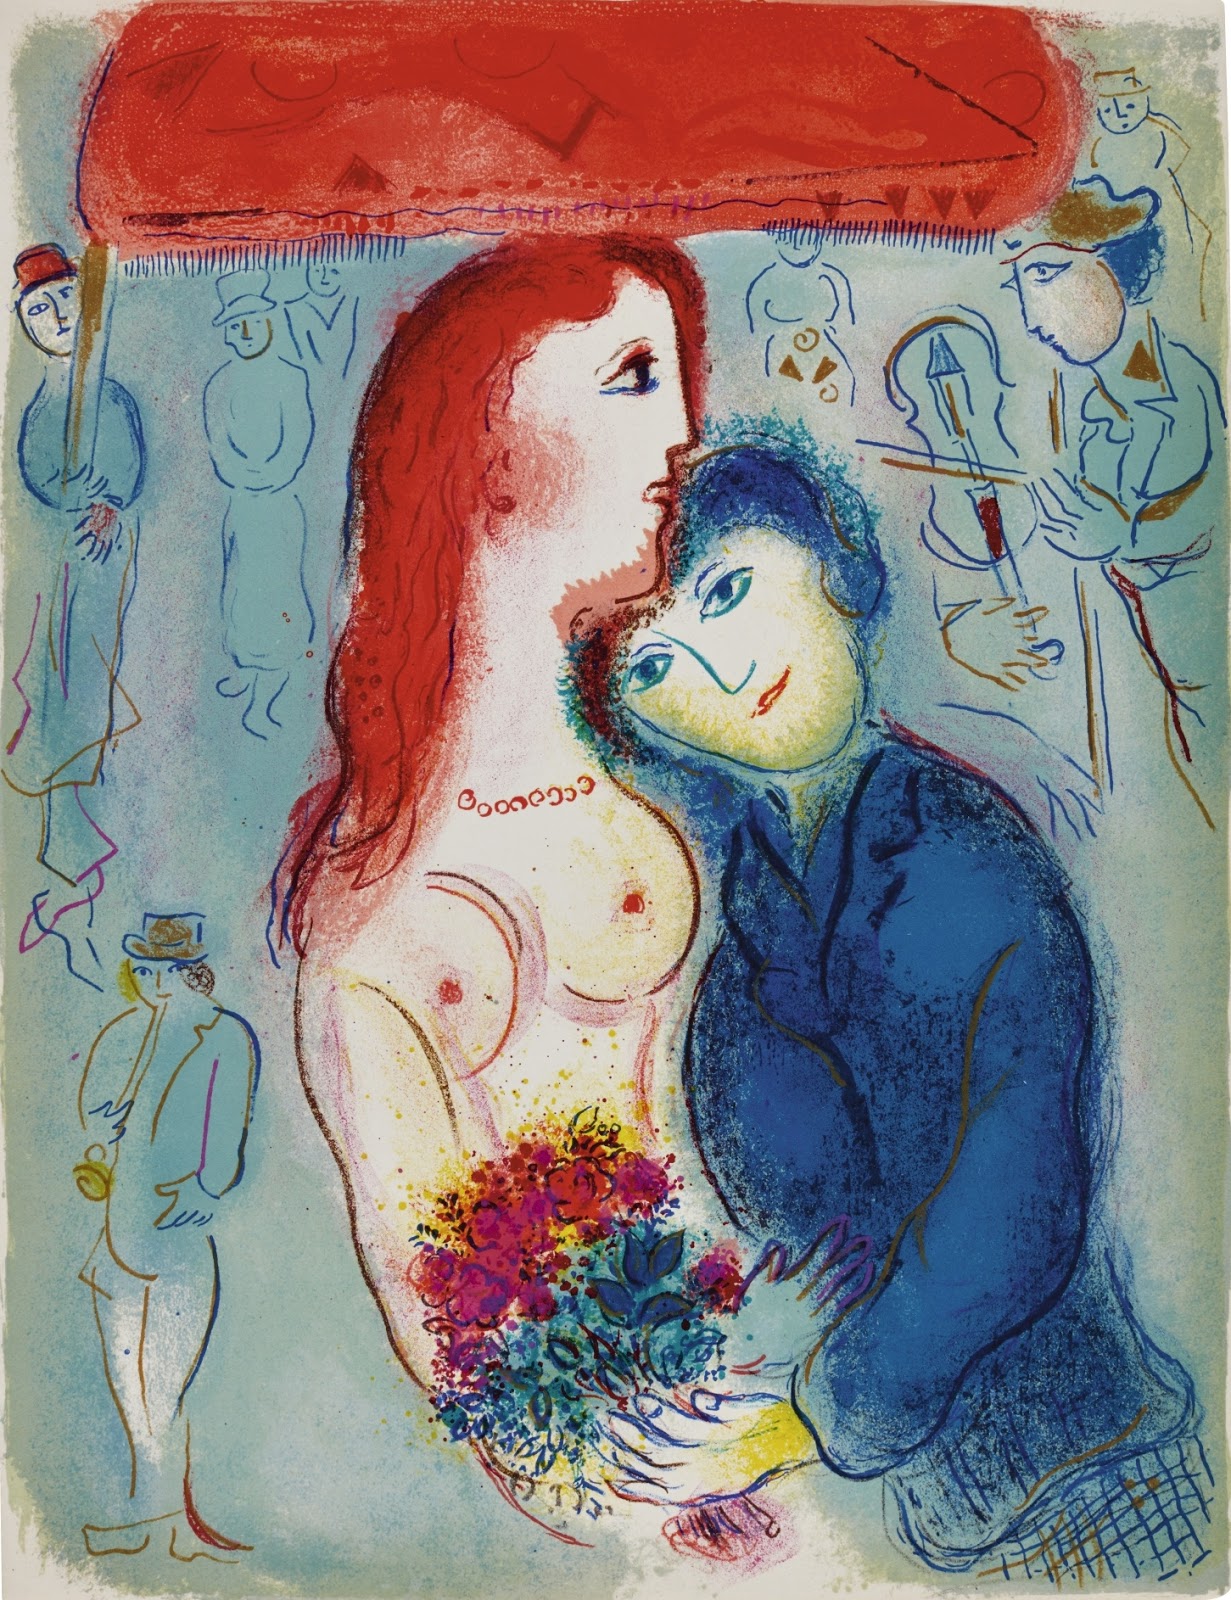 Marc+Chagall-1887-1985 (45).jpg